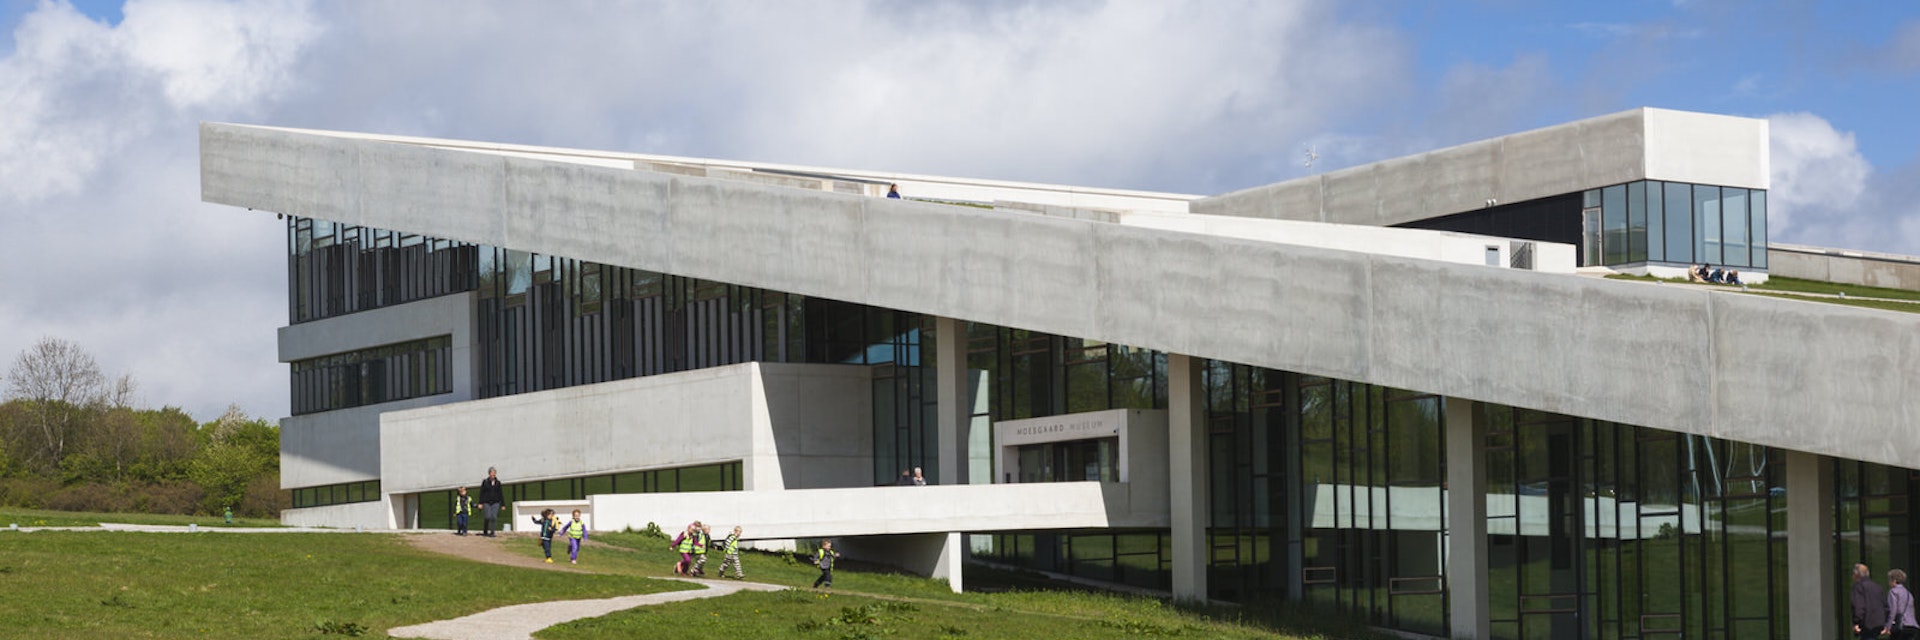 Denmark, Jutland, Aarhus-Hojbjerg, Moesgard Museum, new exhibition buildling designed by Henning Larsen, exterior and roof